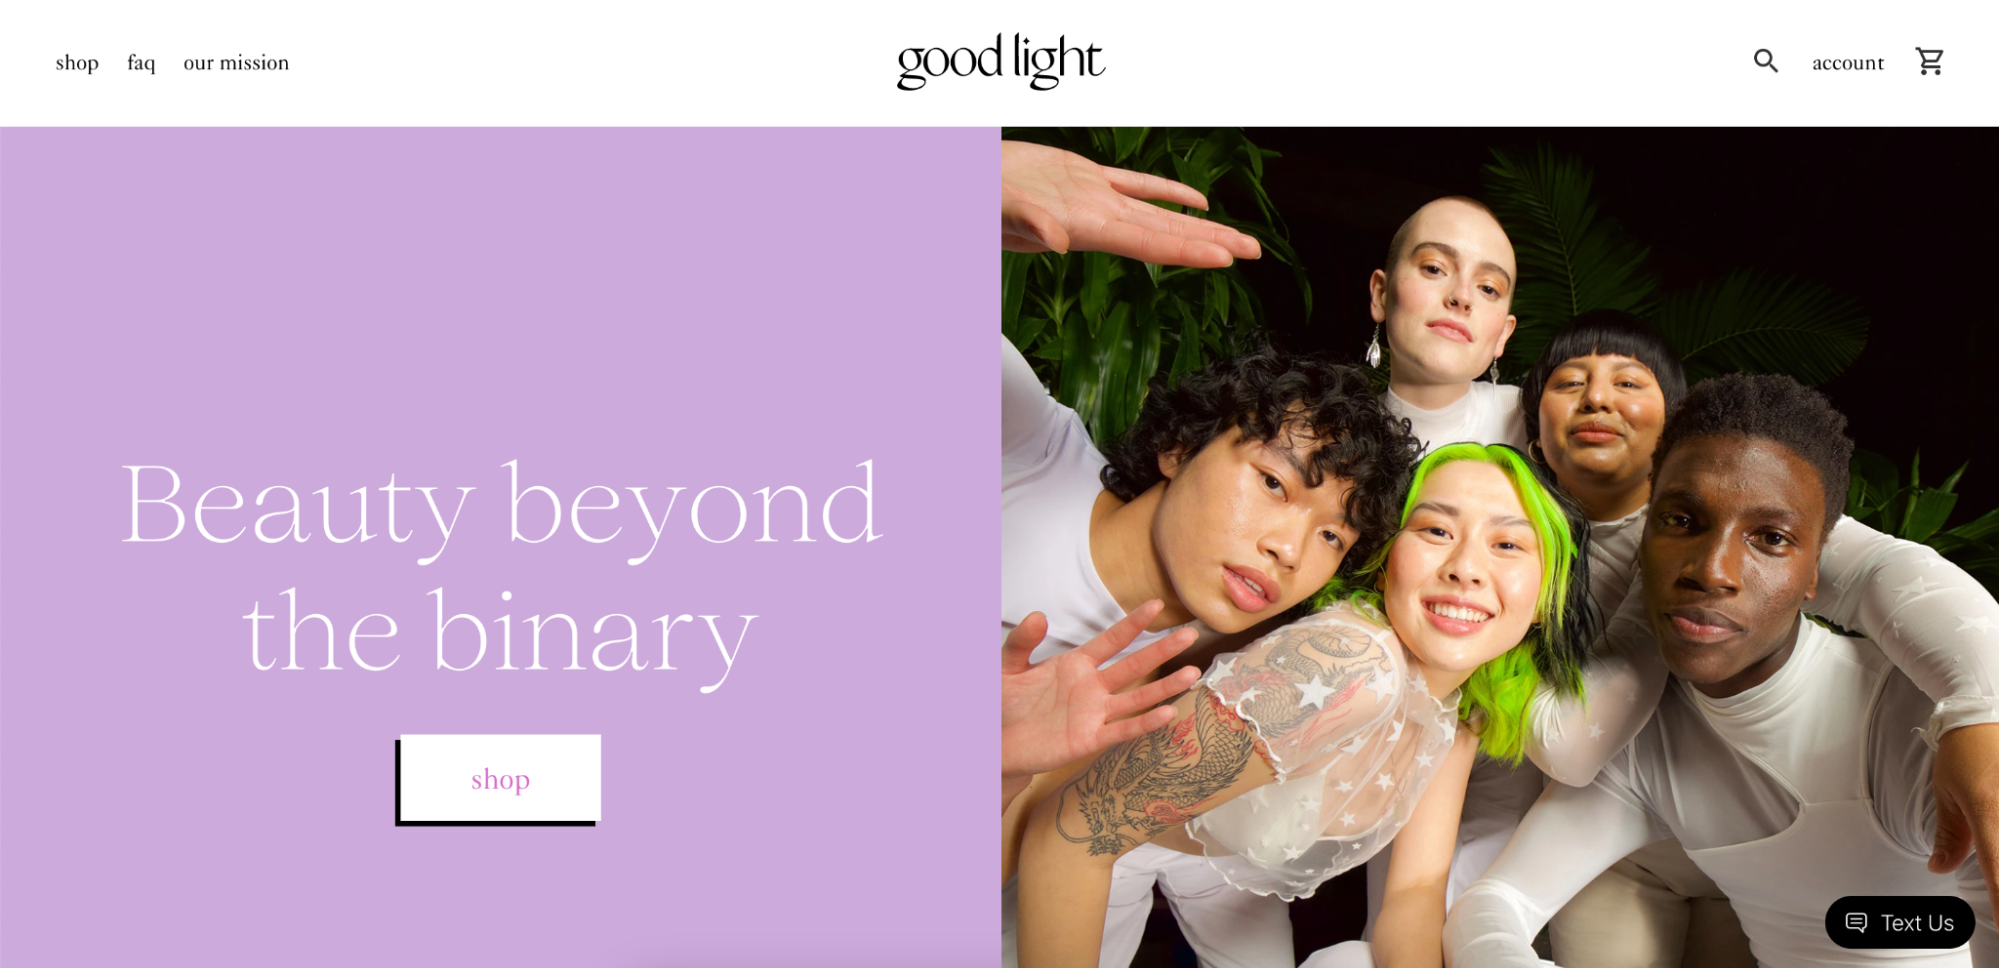 A screenshot of good light beauty's homepage.